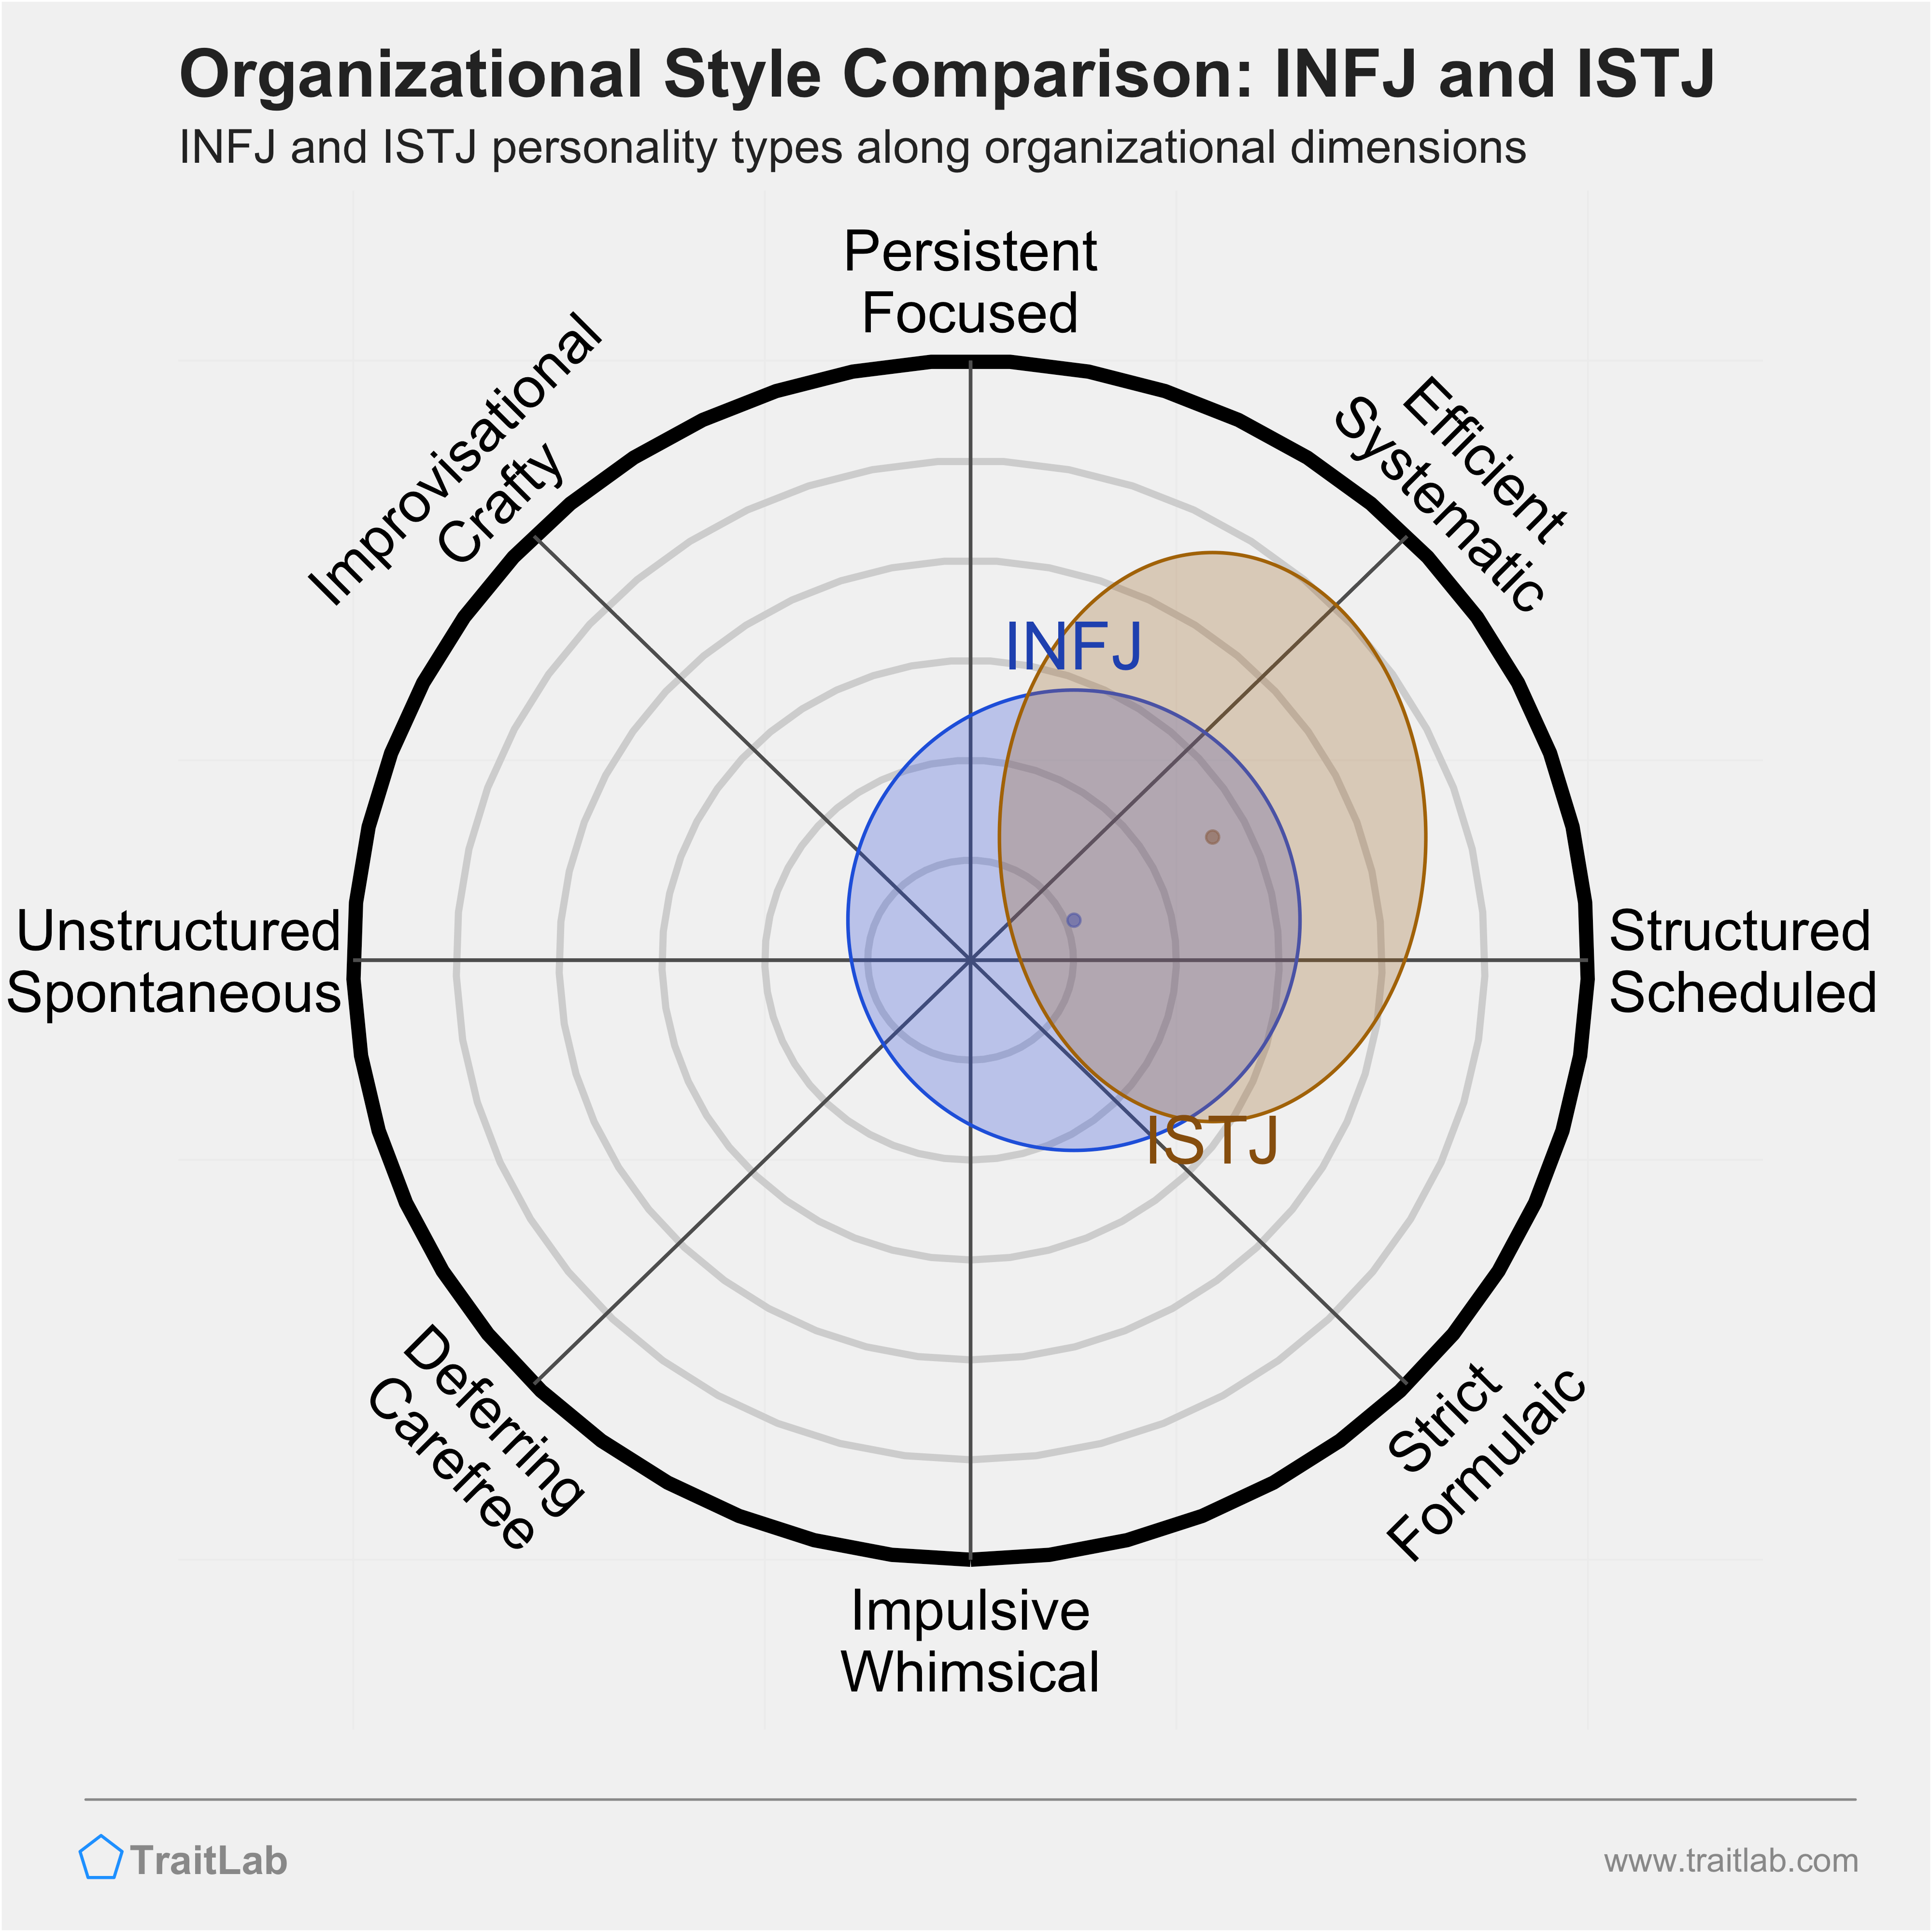 INFJ and ISTJ comparison across organizational dimensions